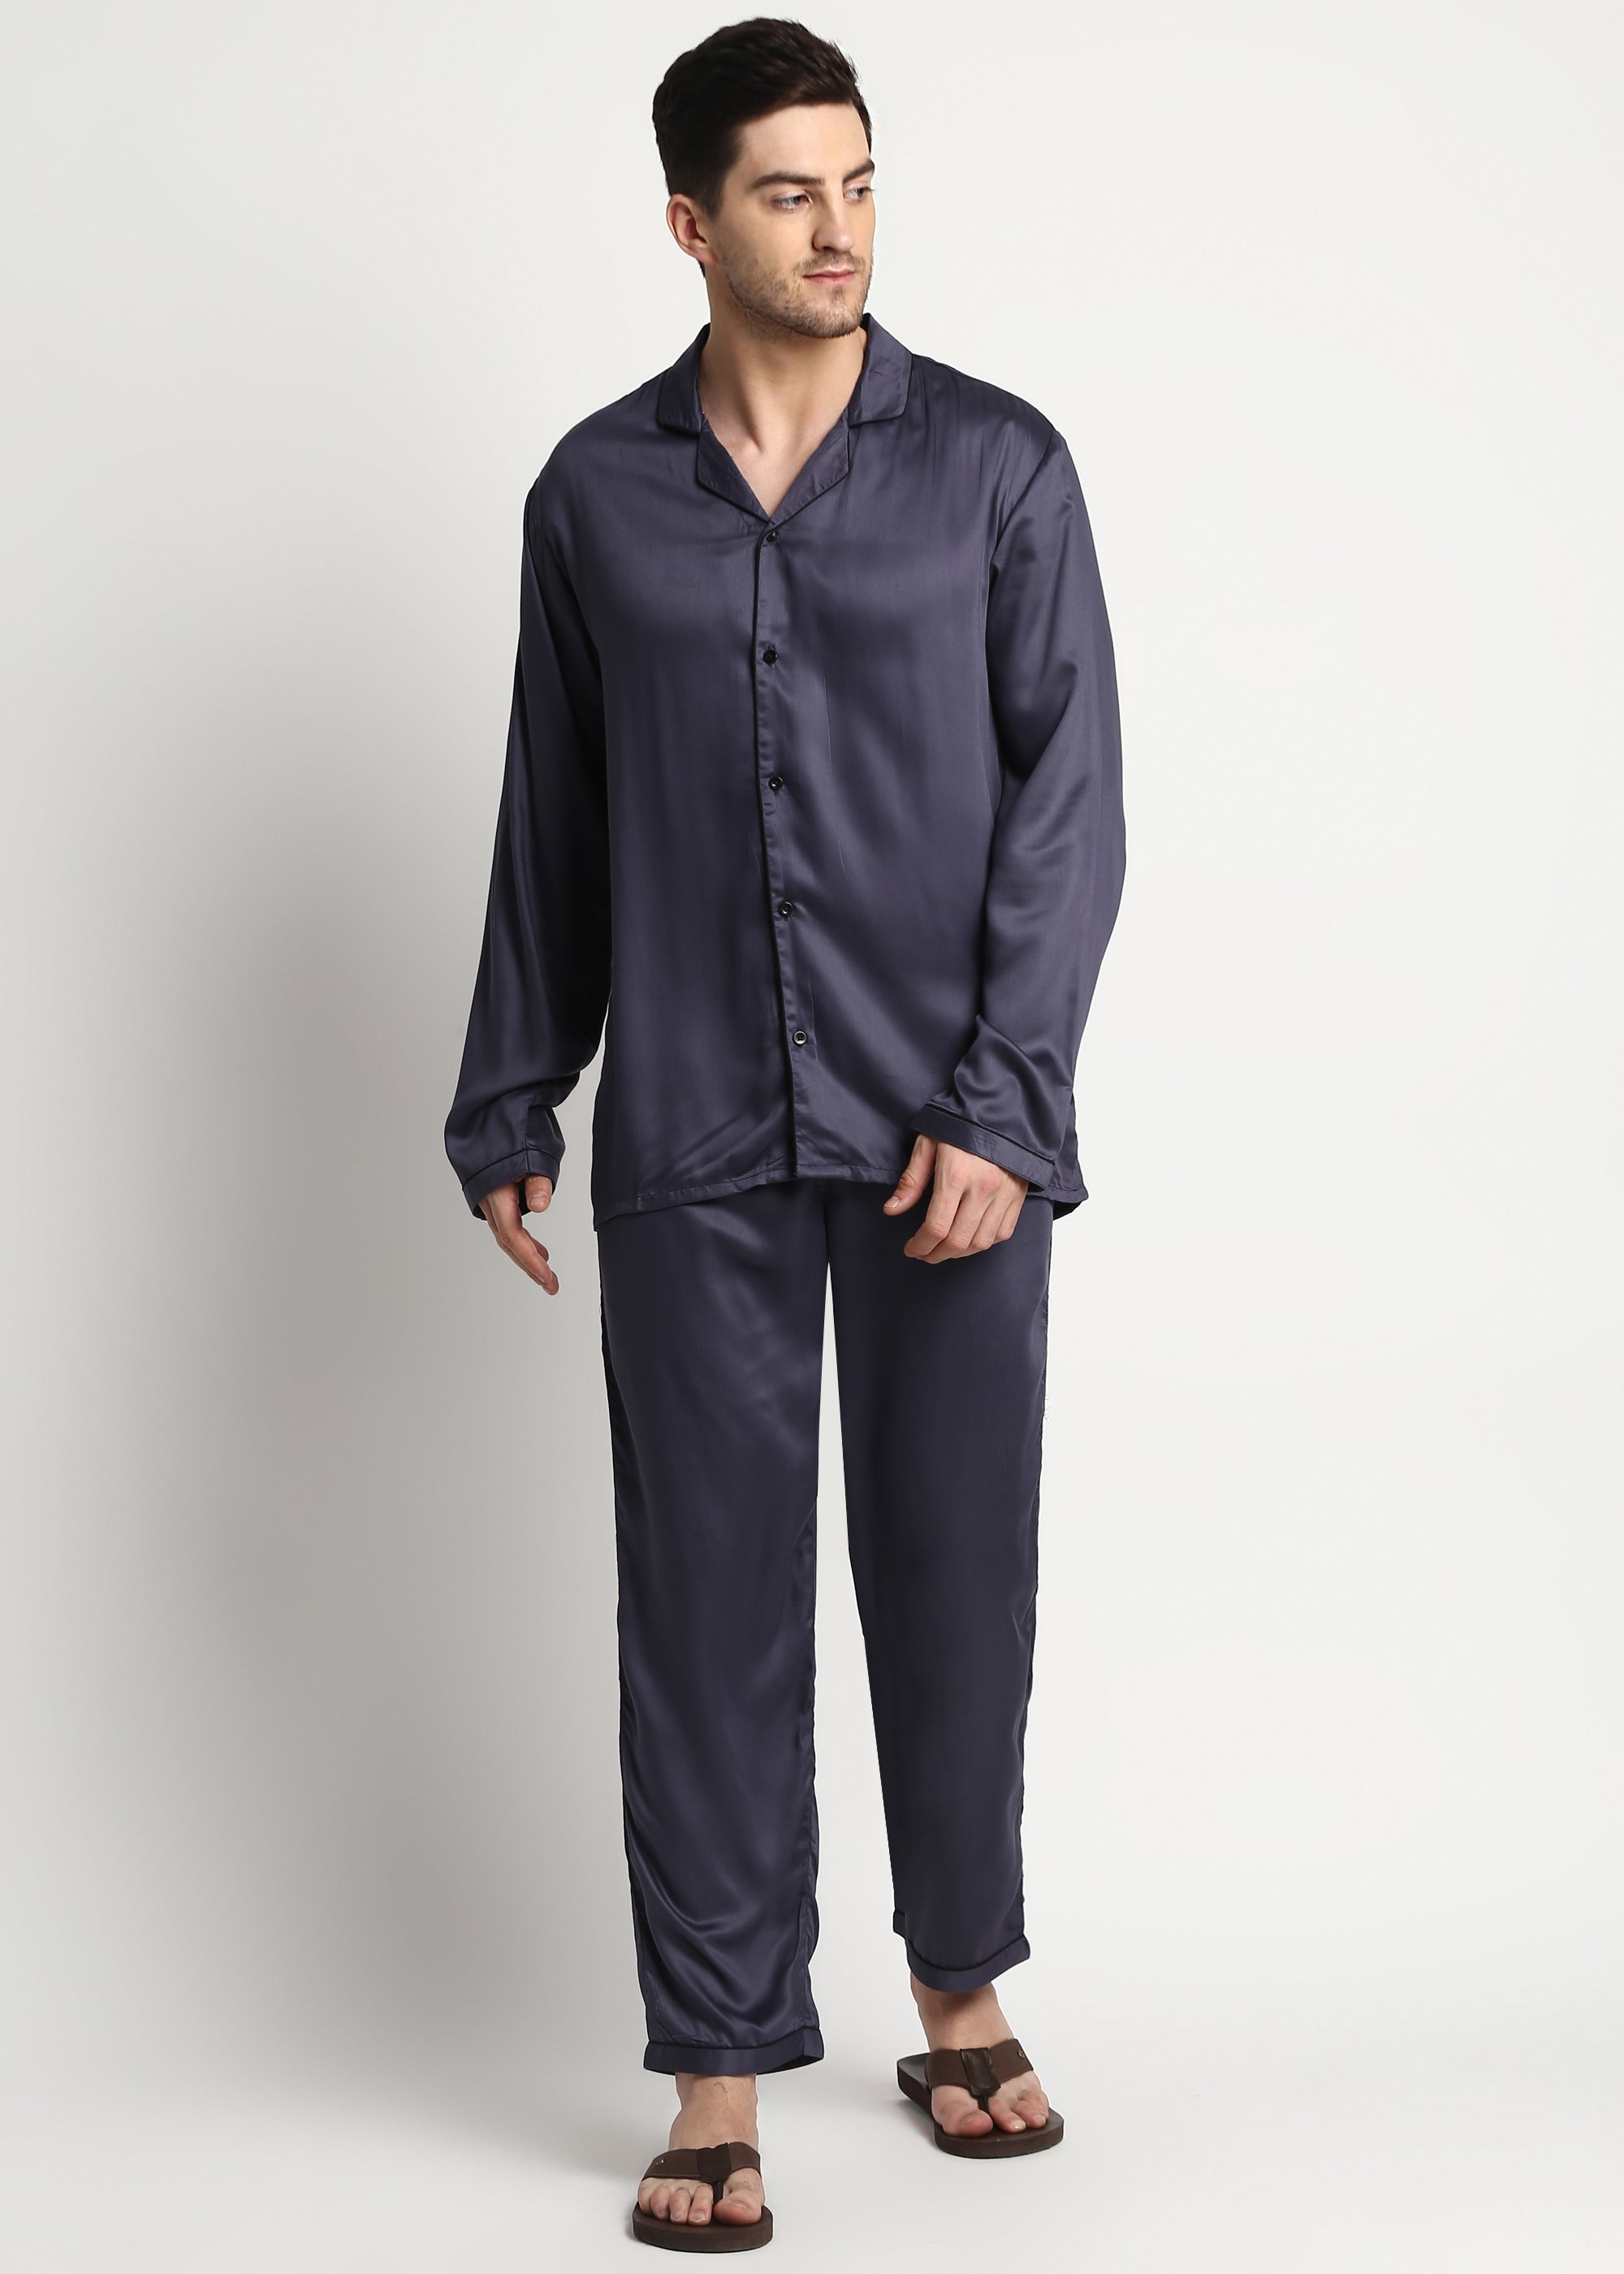 Buy Stylish Hearts Men Night Suit Set 100% Cotton Label, 57% OFF